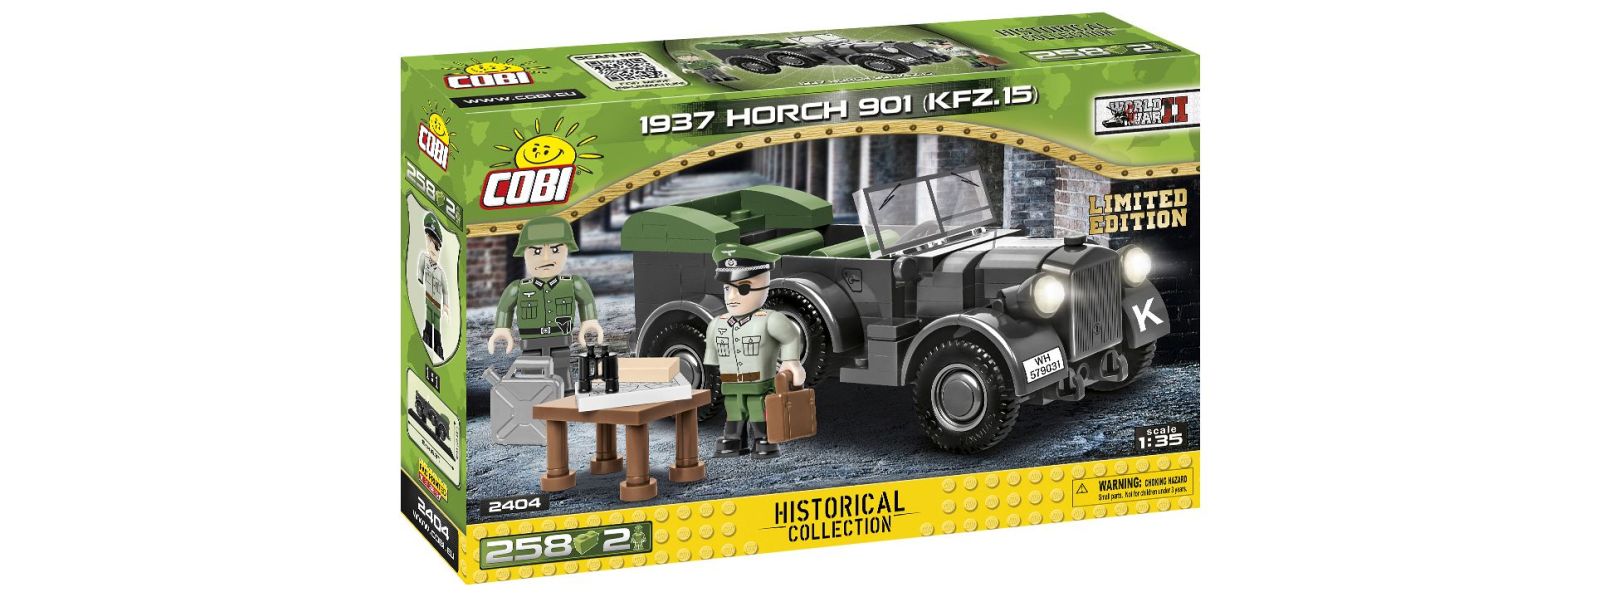 Vorverkauf 1937 Horch 901 kfz. 15 Limited Edition!